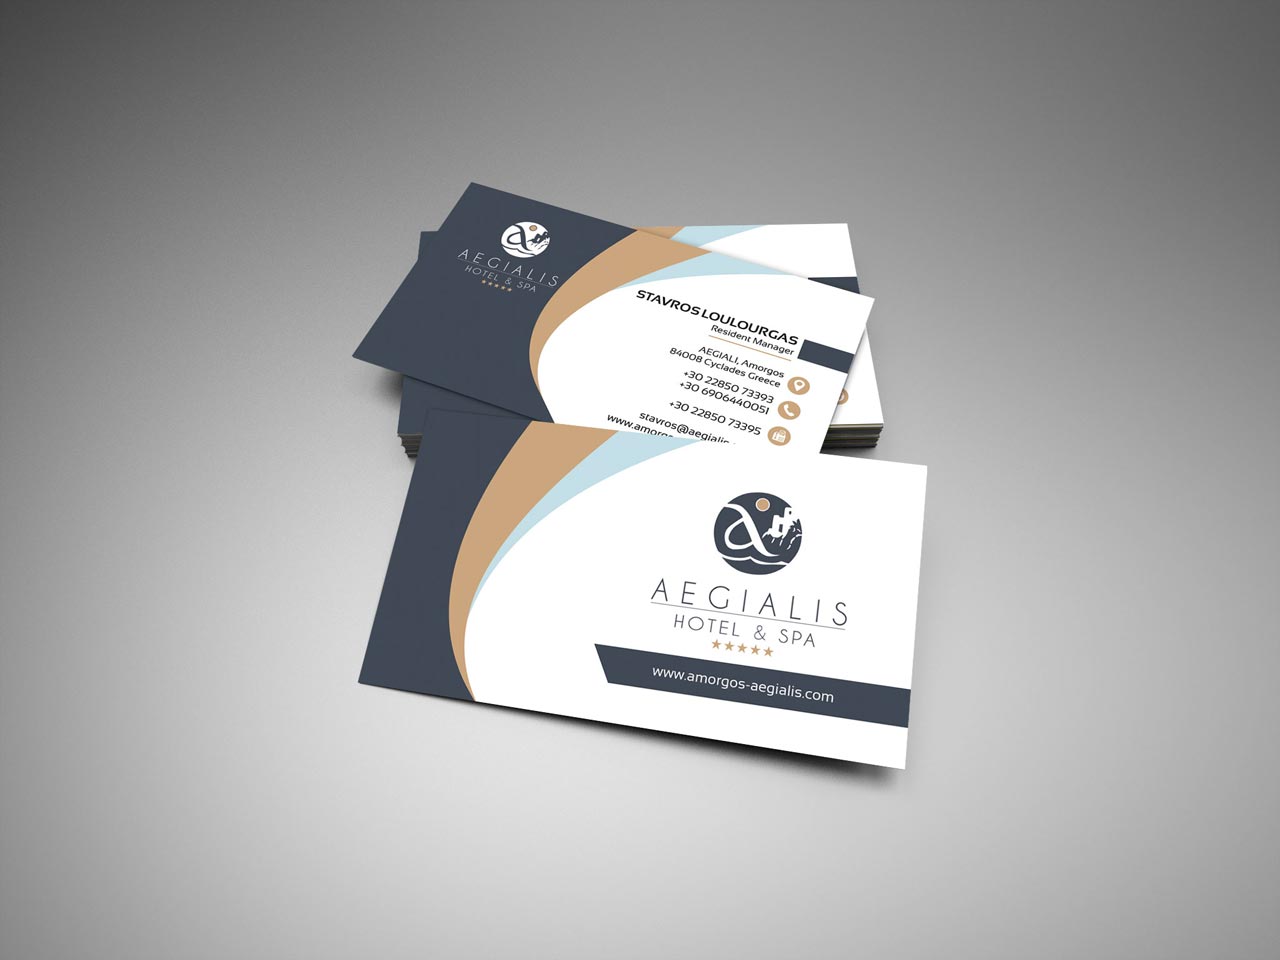 Aegialis Business card